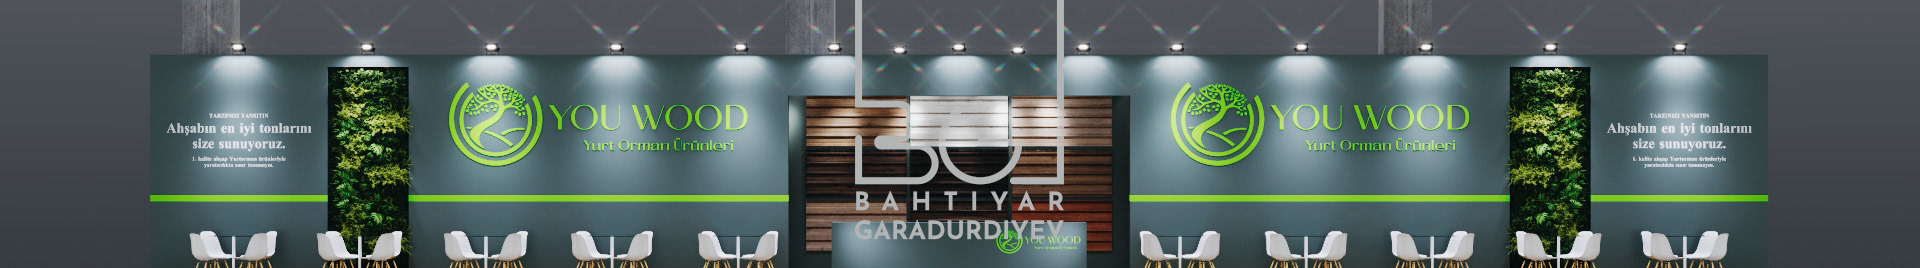 Bahtiyar Garadurdiyev's profile banner